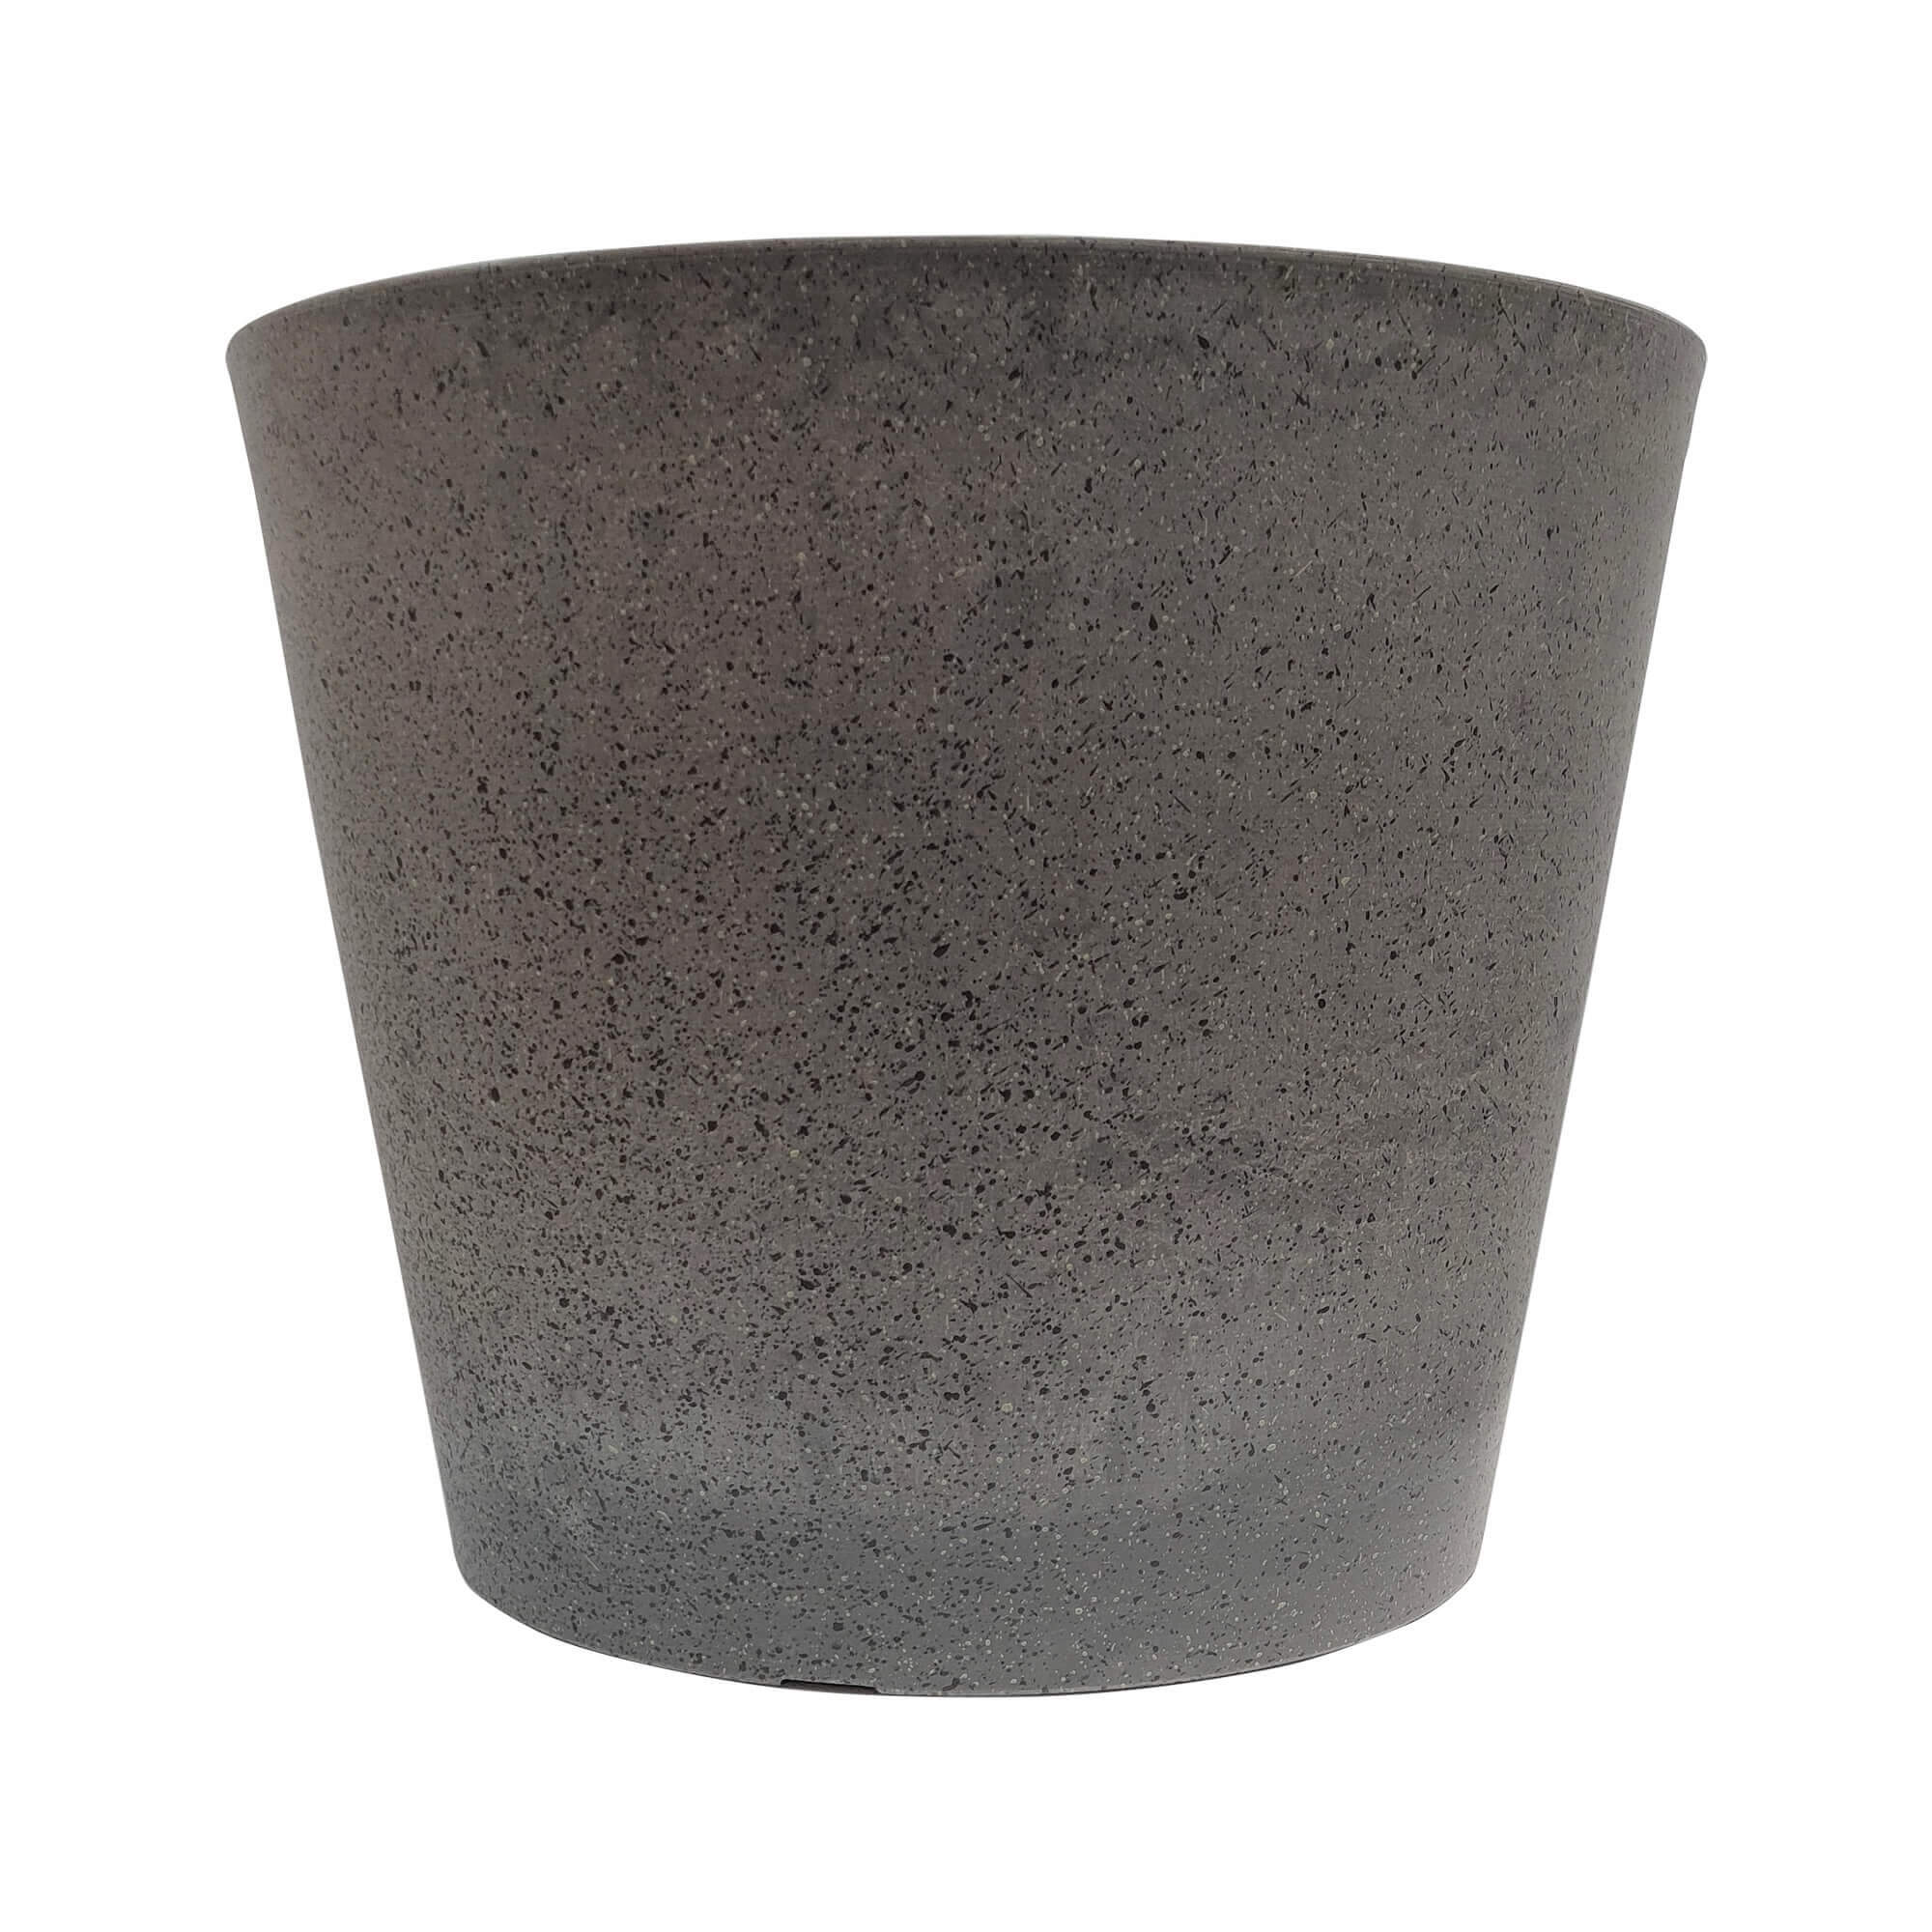 imitation-stone-grey-pot-40cm-313100.jpg